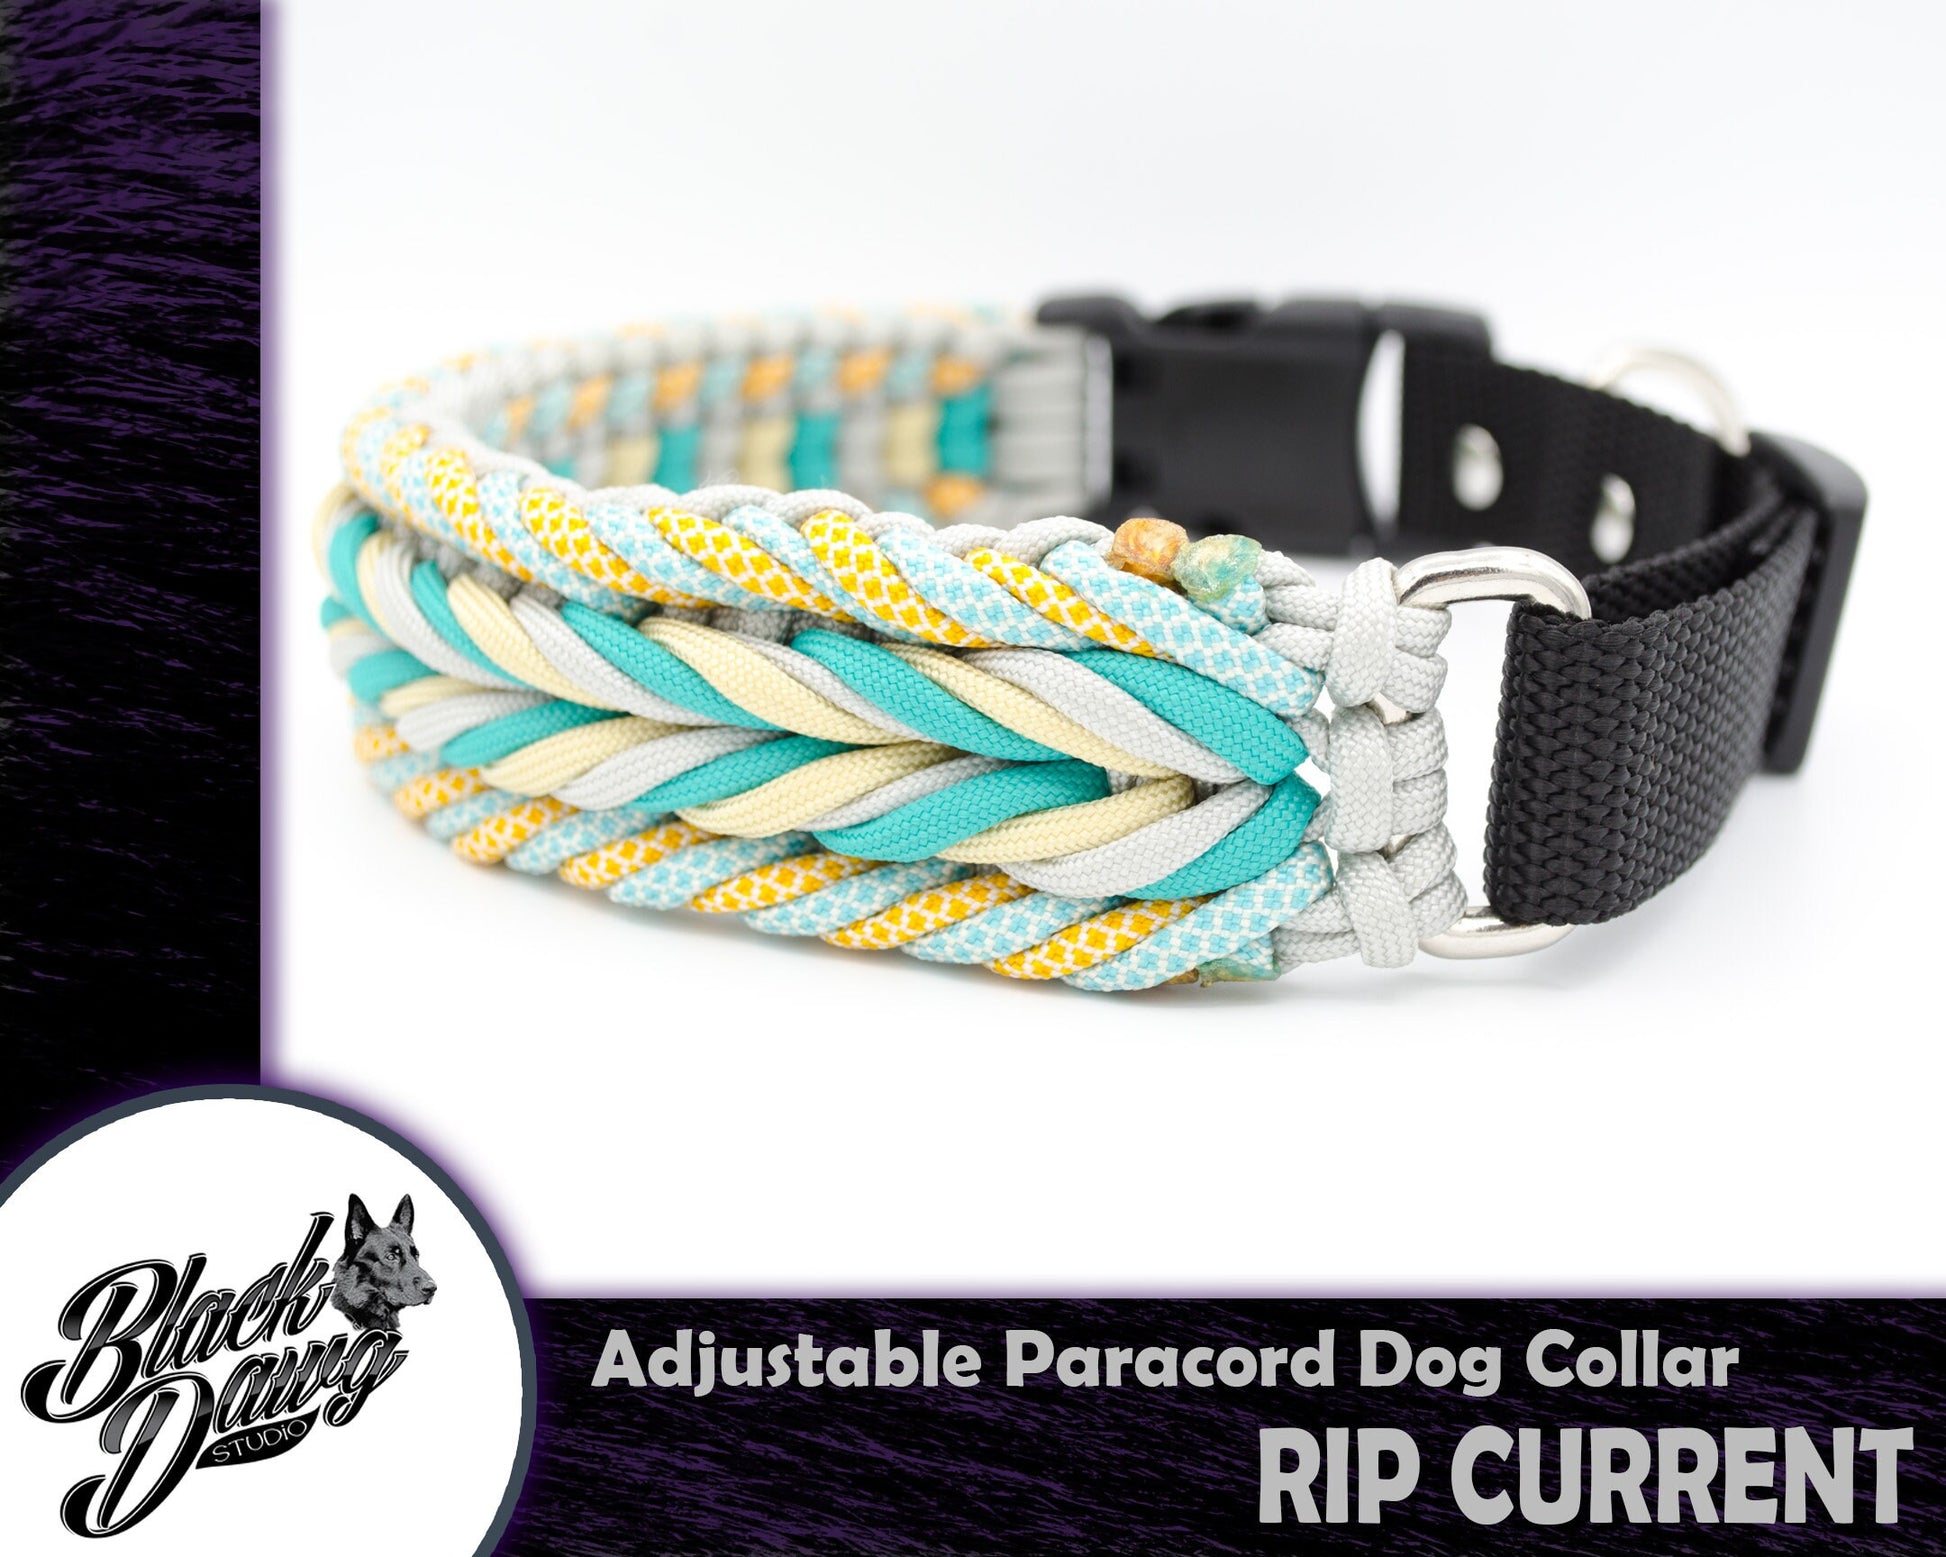 Rip Current Design Adjustable Paracord Dog Collar - Teal, Cream, Silver Grey, Diamond Turquoise/Cream, Honeycomb